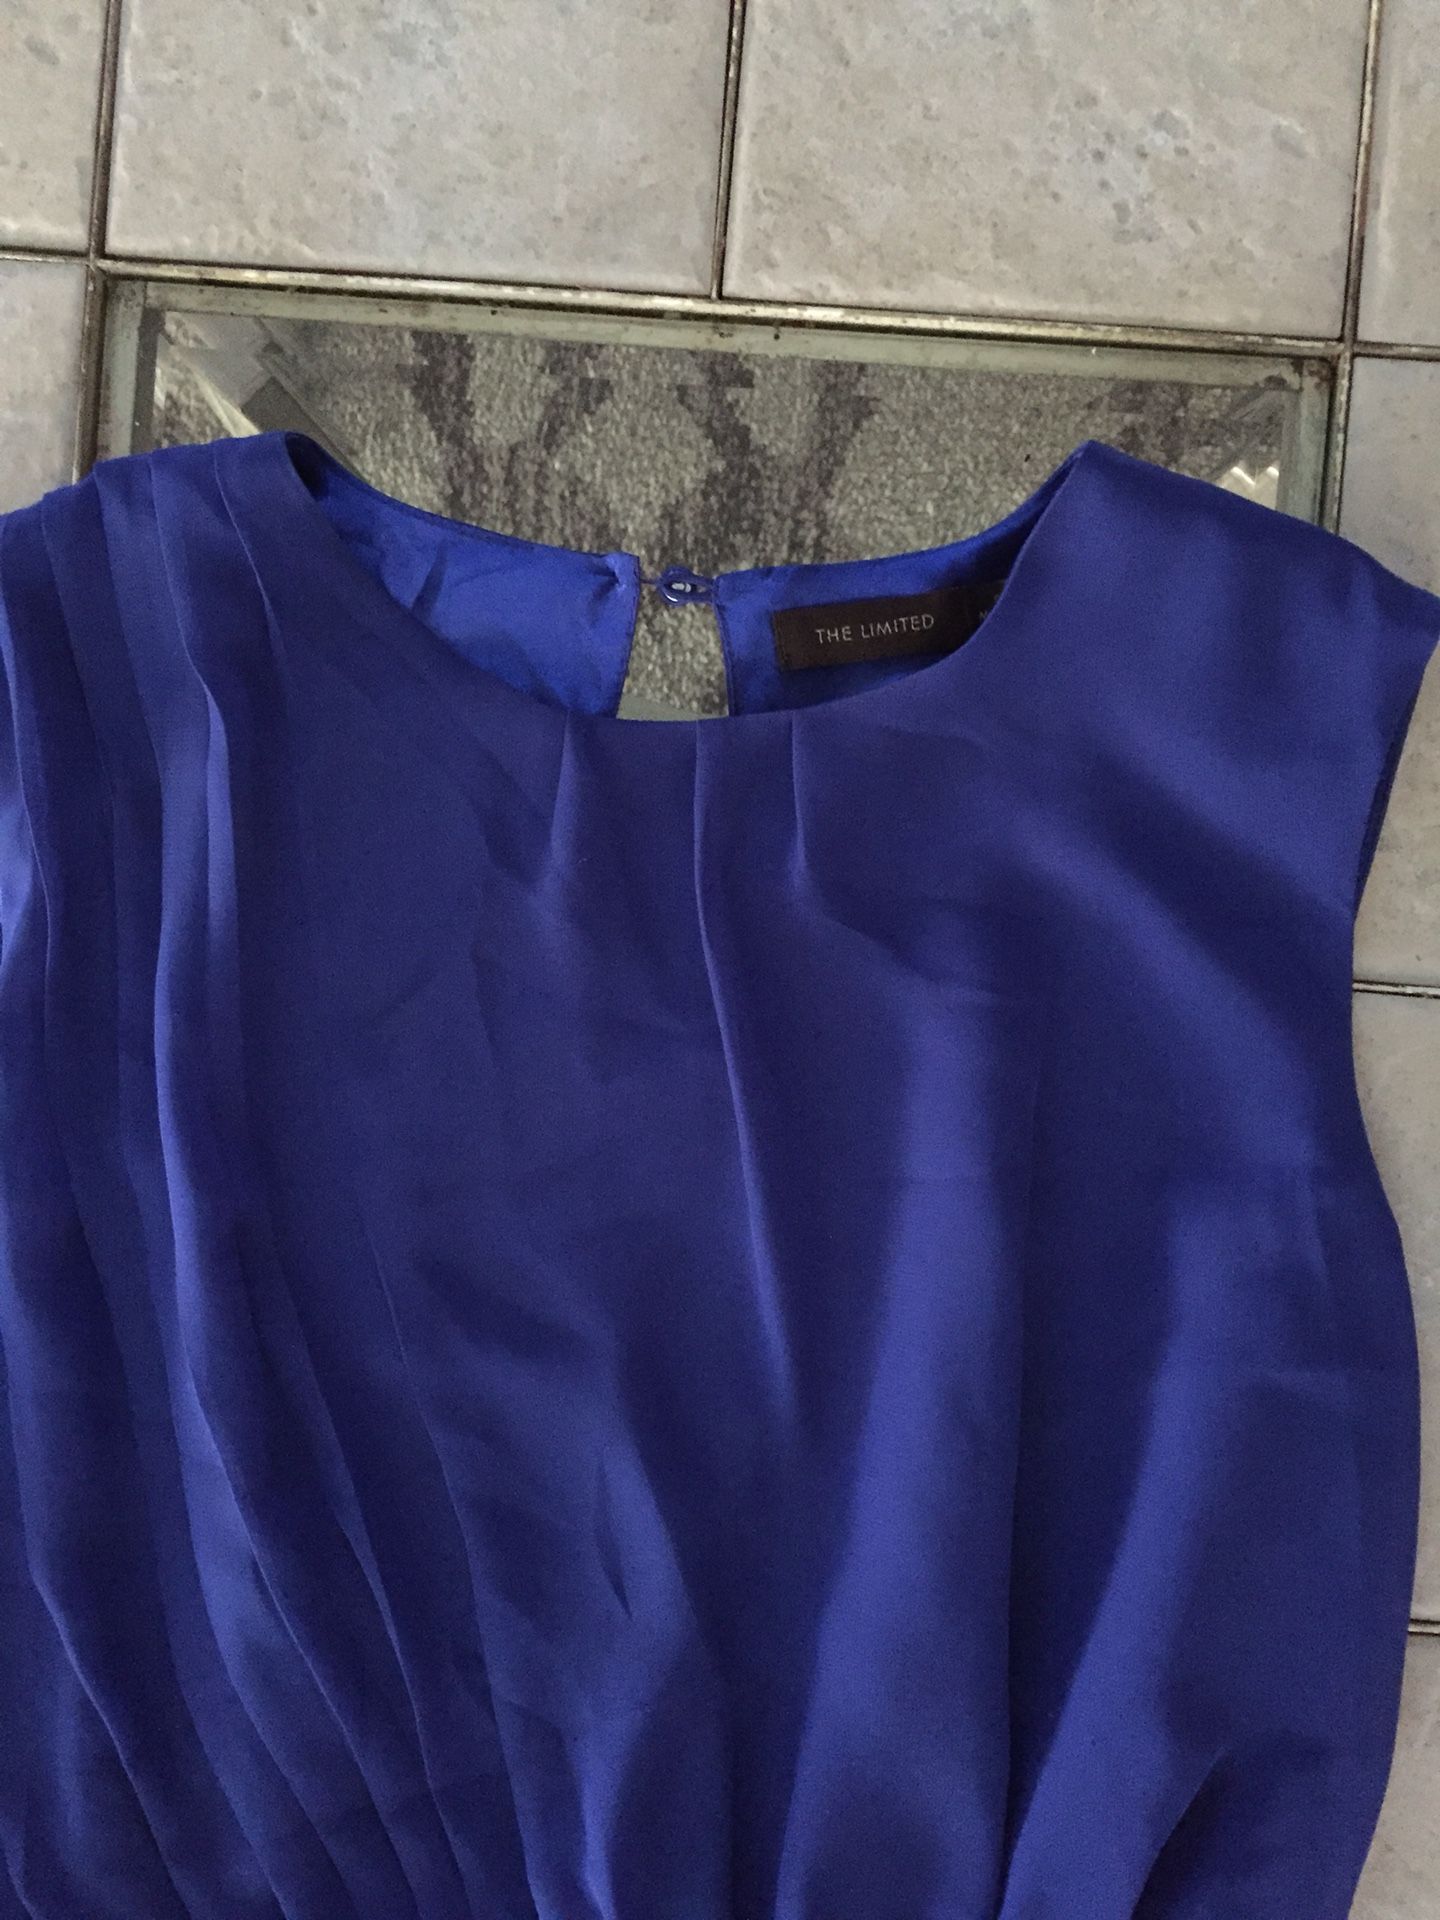 New blue dress